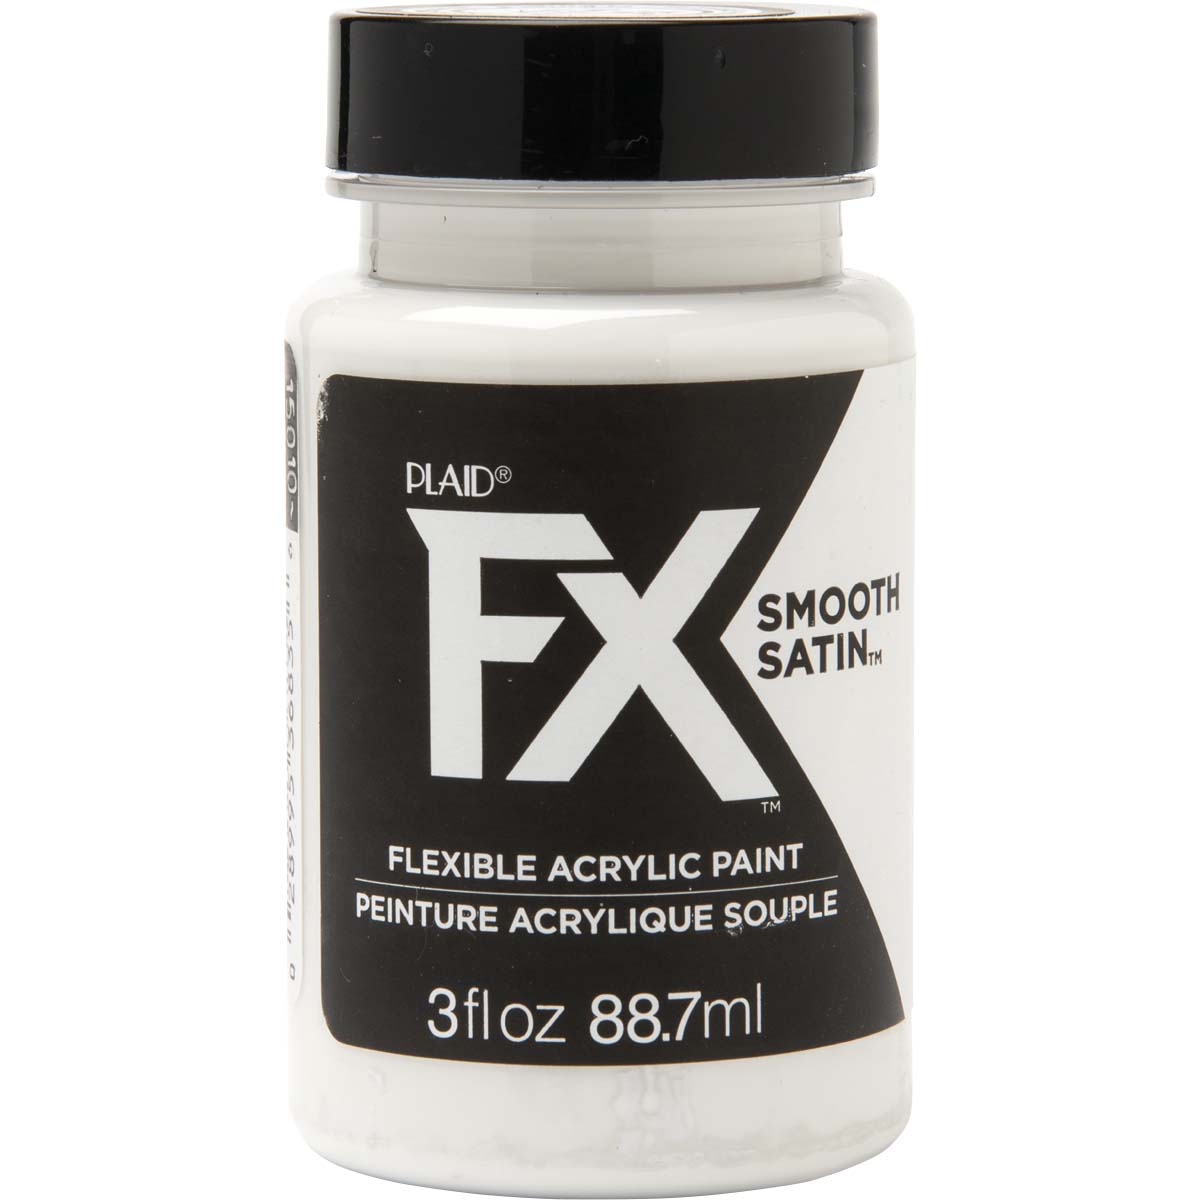 PlaidFX Smooth Satin Flexible Acrylic Paint - Blizzard, 3 oz. - 36835